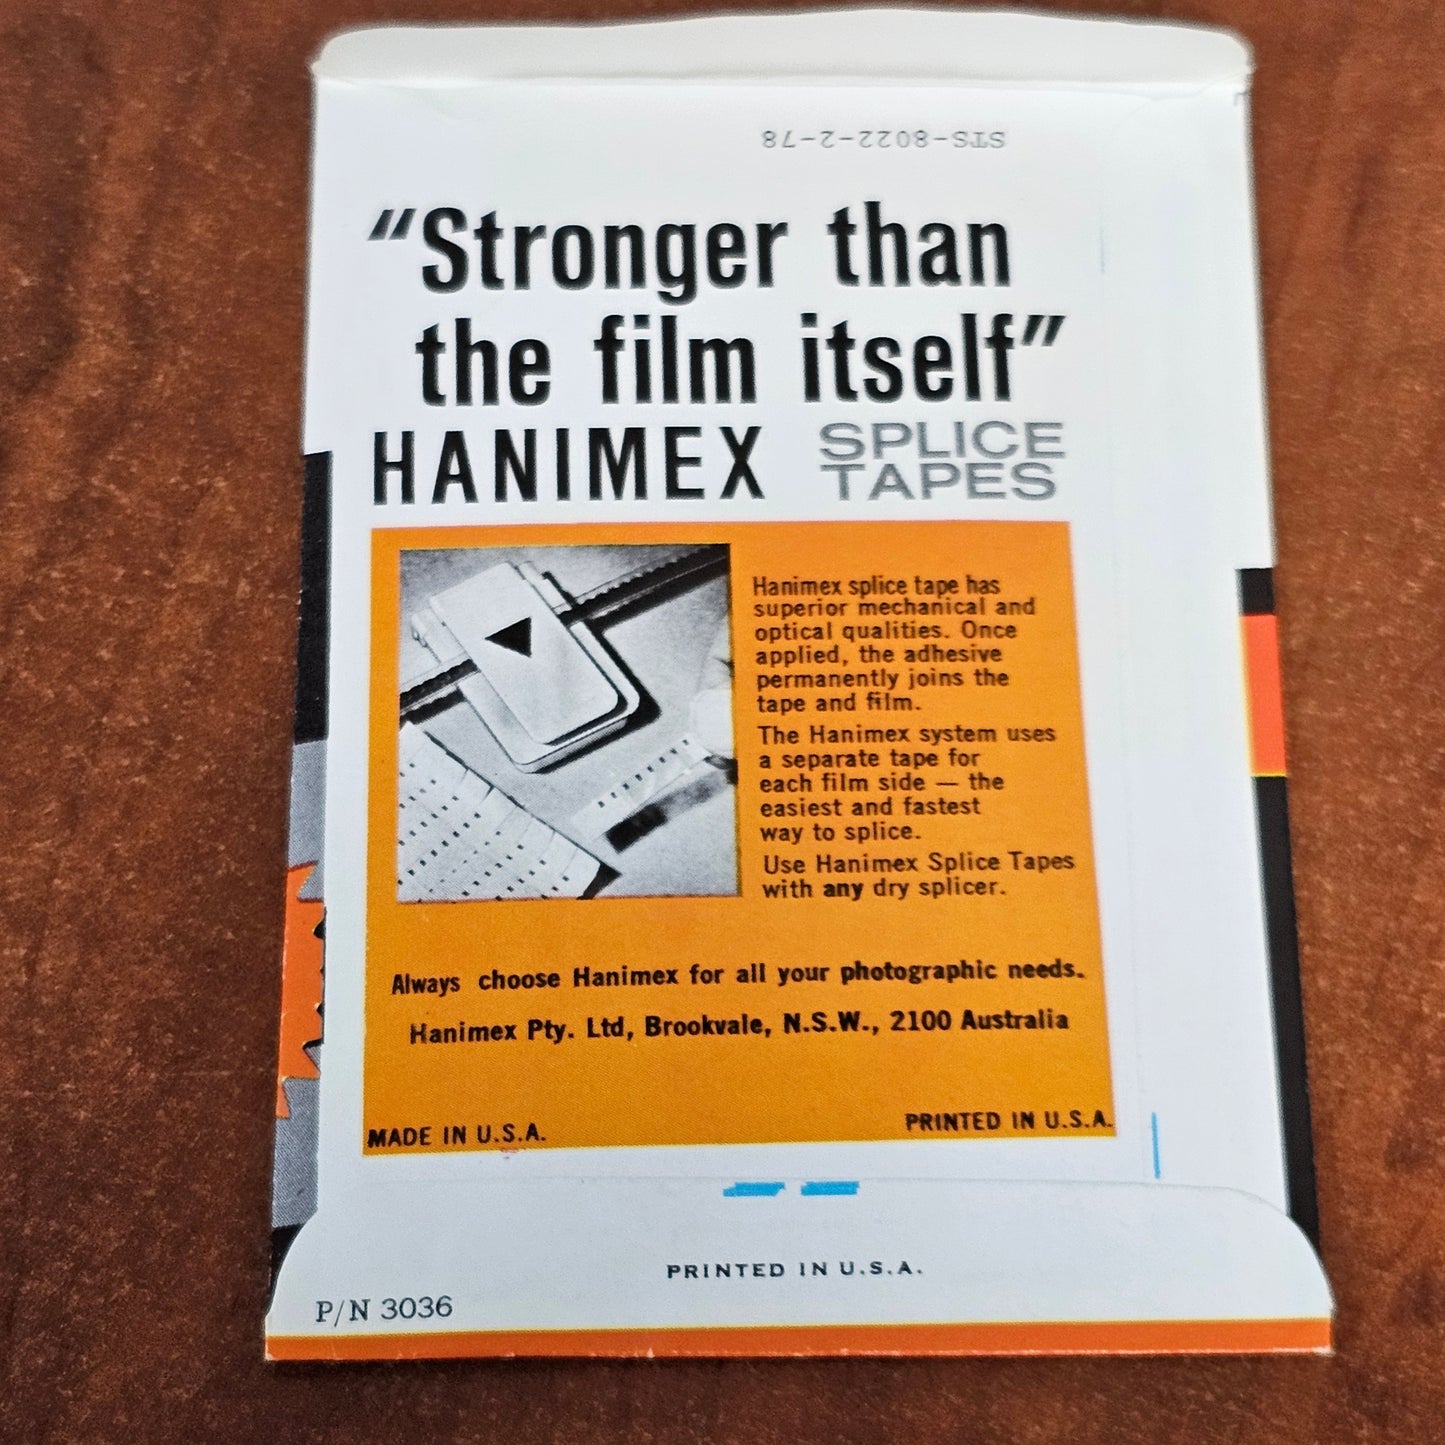 Hanimex 8mm Film Splices pack of 40 Splices